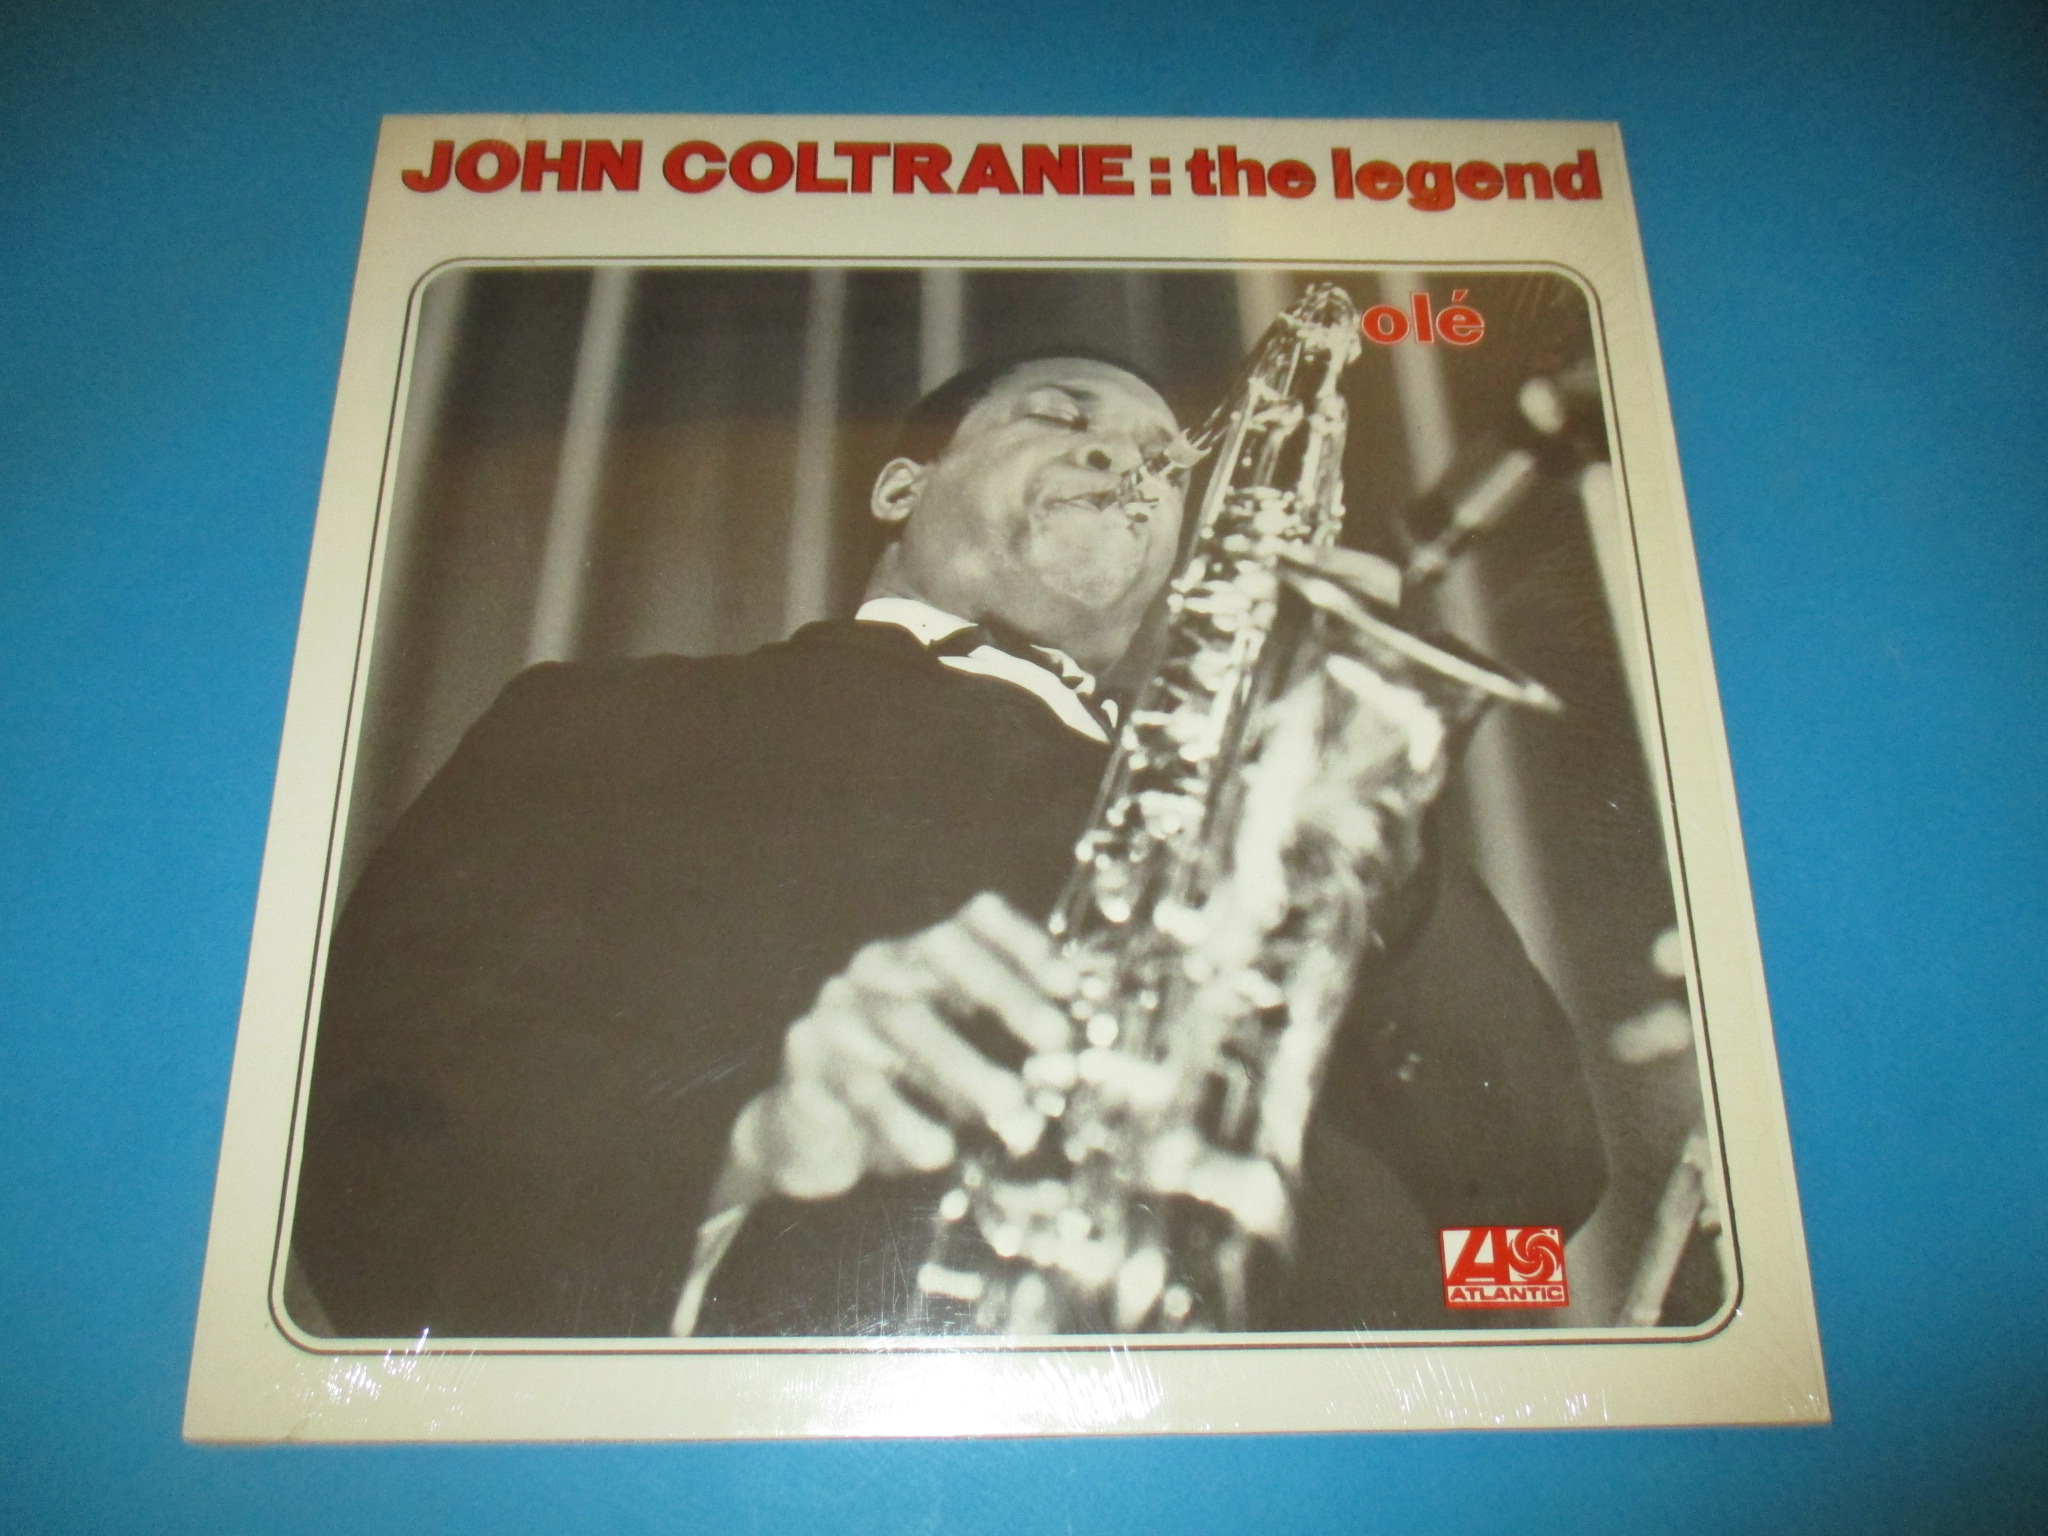 John Coltrane : The Legend, Olé + Dahomey Dance + Aisha, 33 touts Atlantic